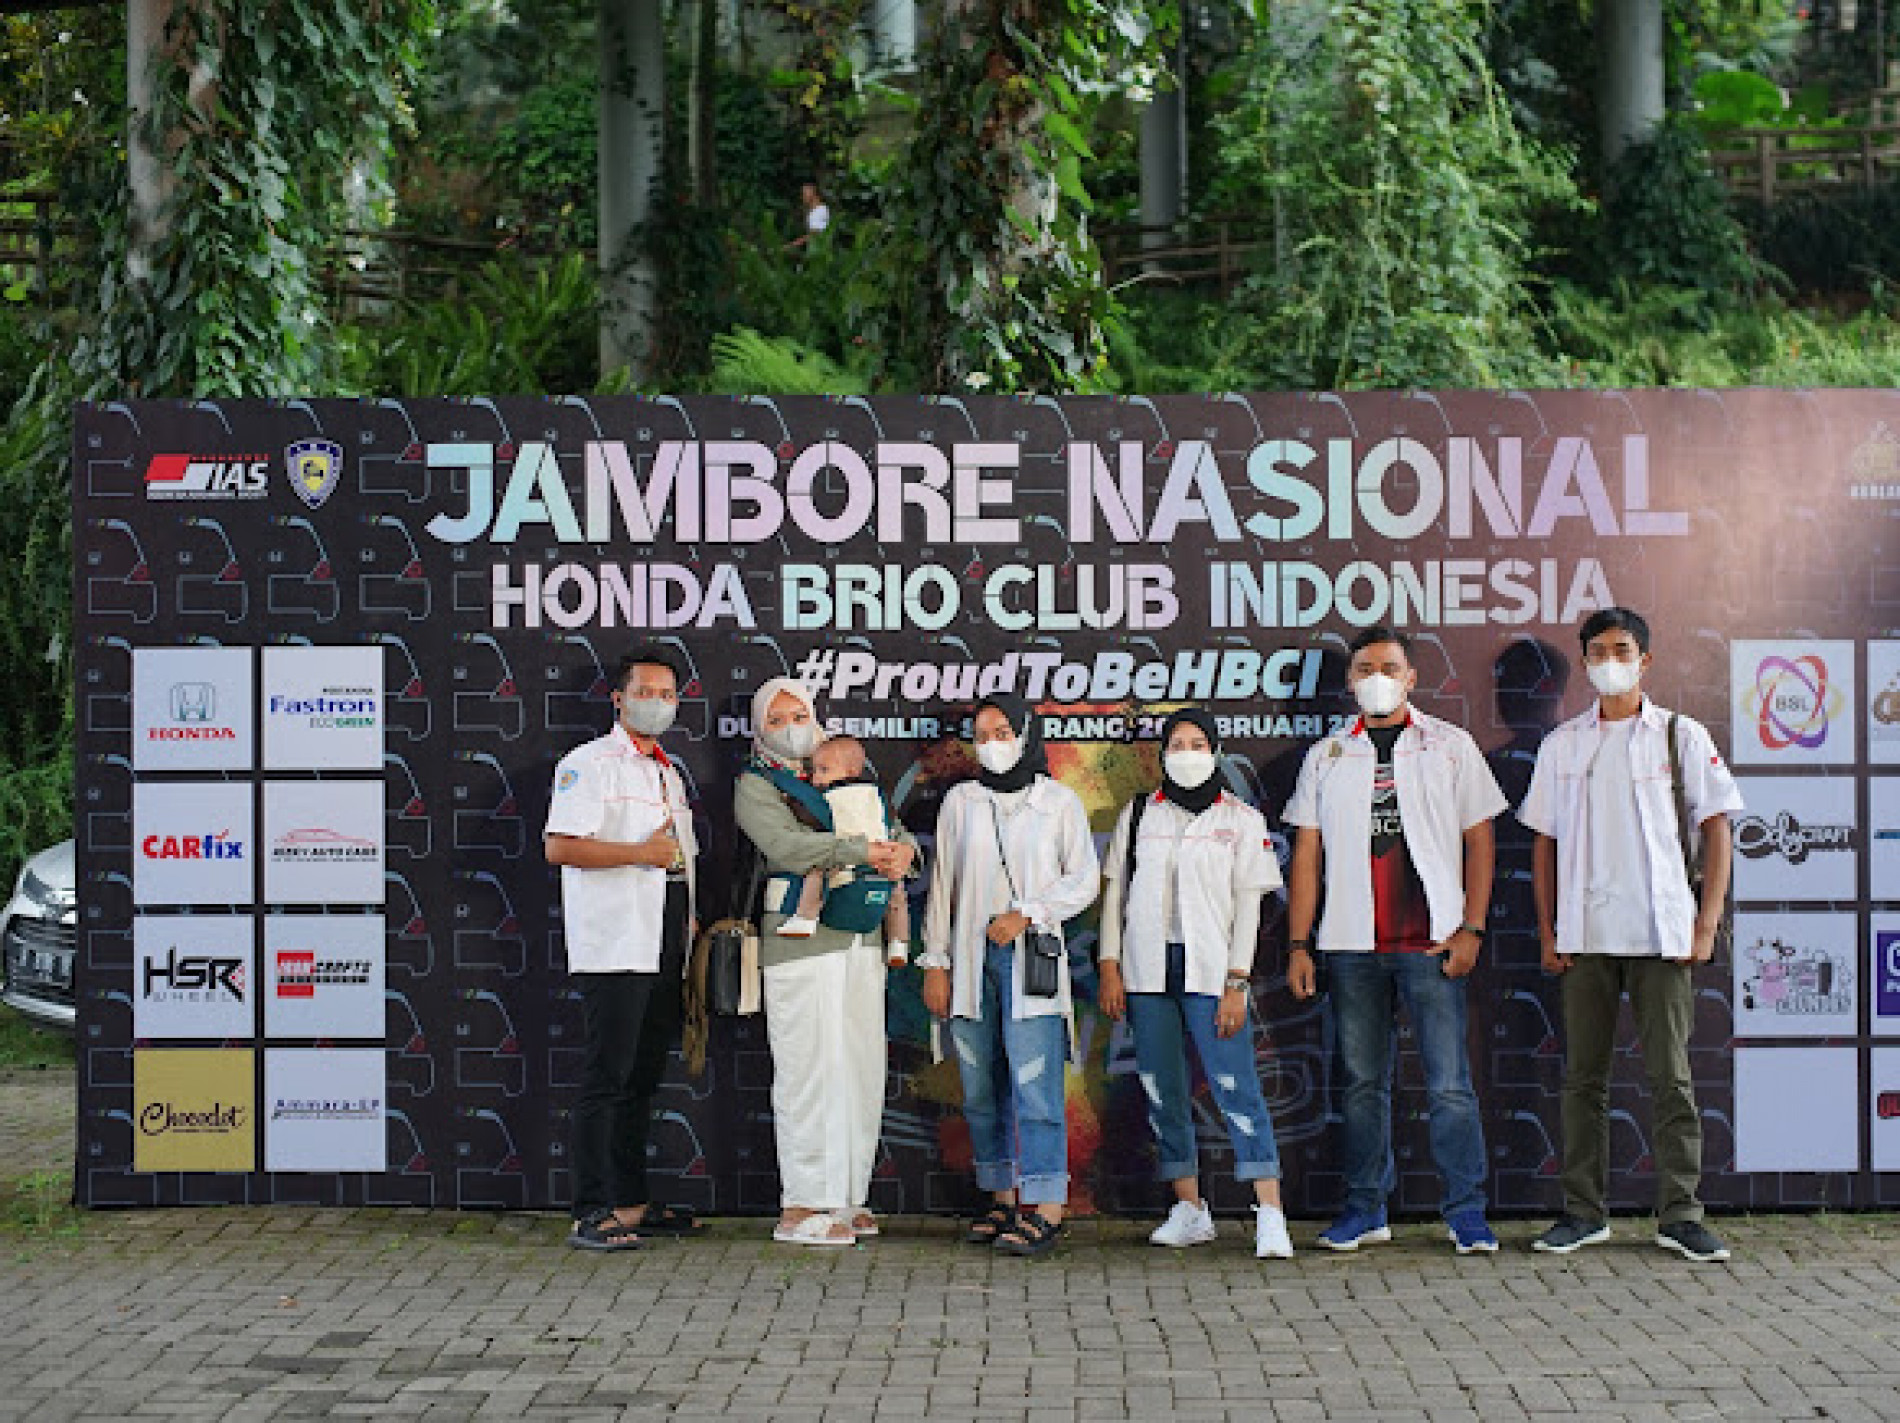 The 1st JAMBORE NASIONAL HBCI (Honda Brio Club Indonesia) “Together as One”